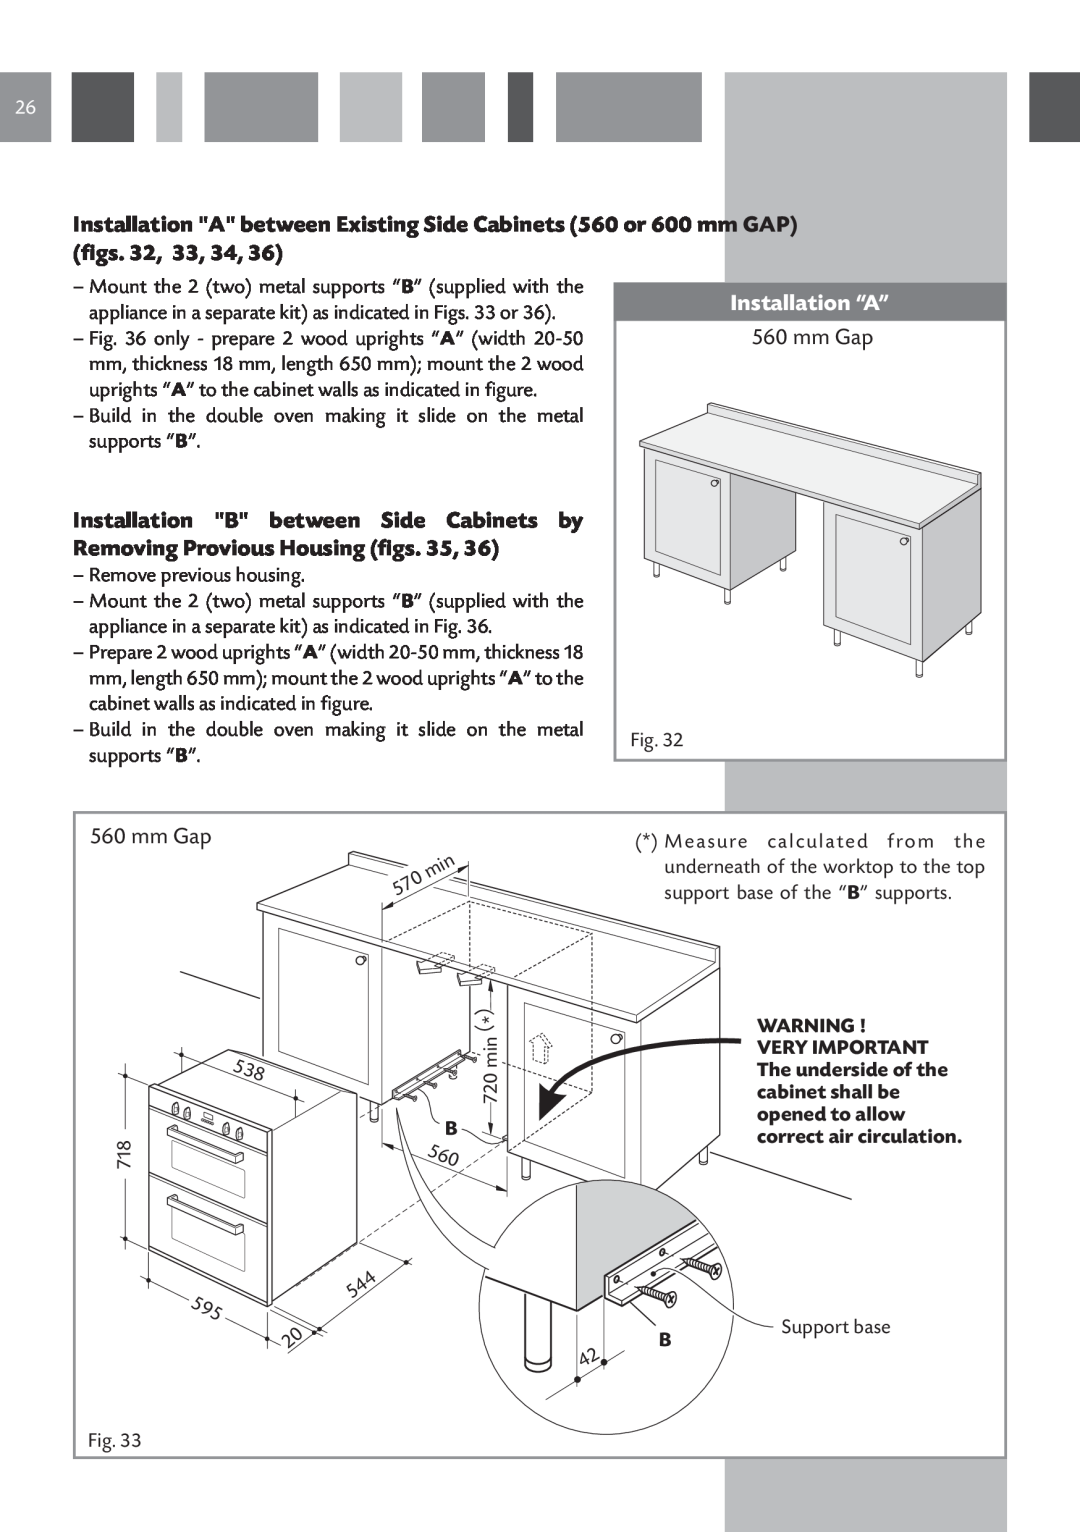 CDA DC730 manual Installation “A”, mm Gap 